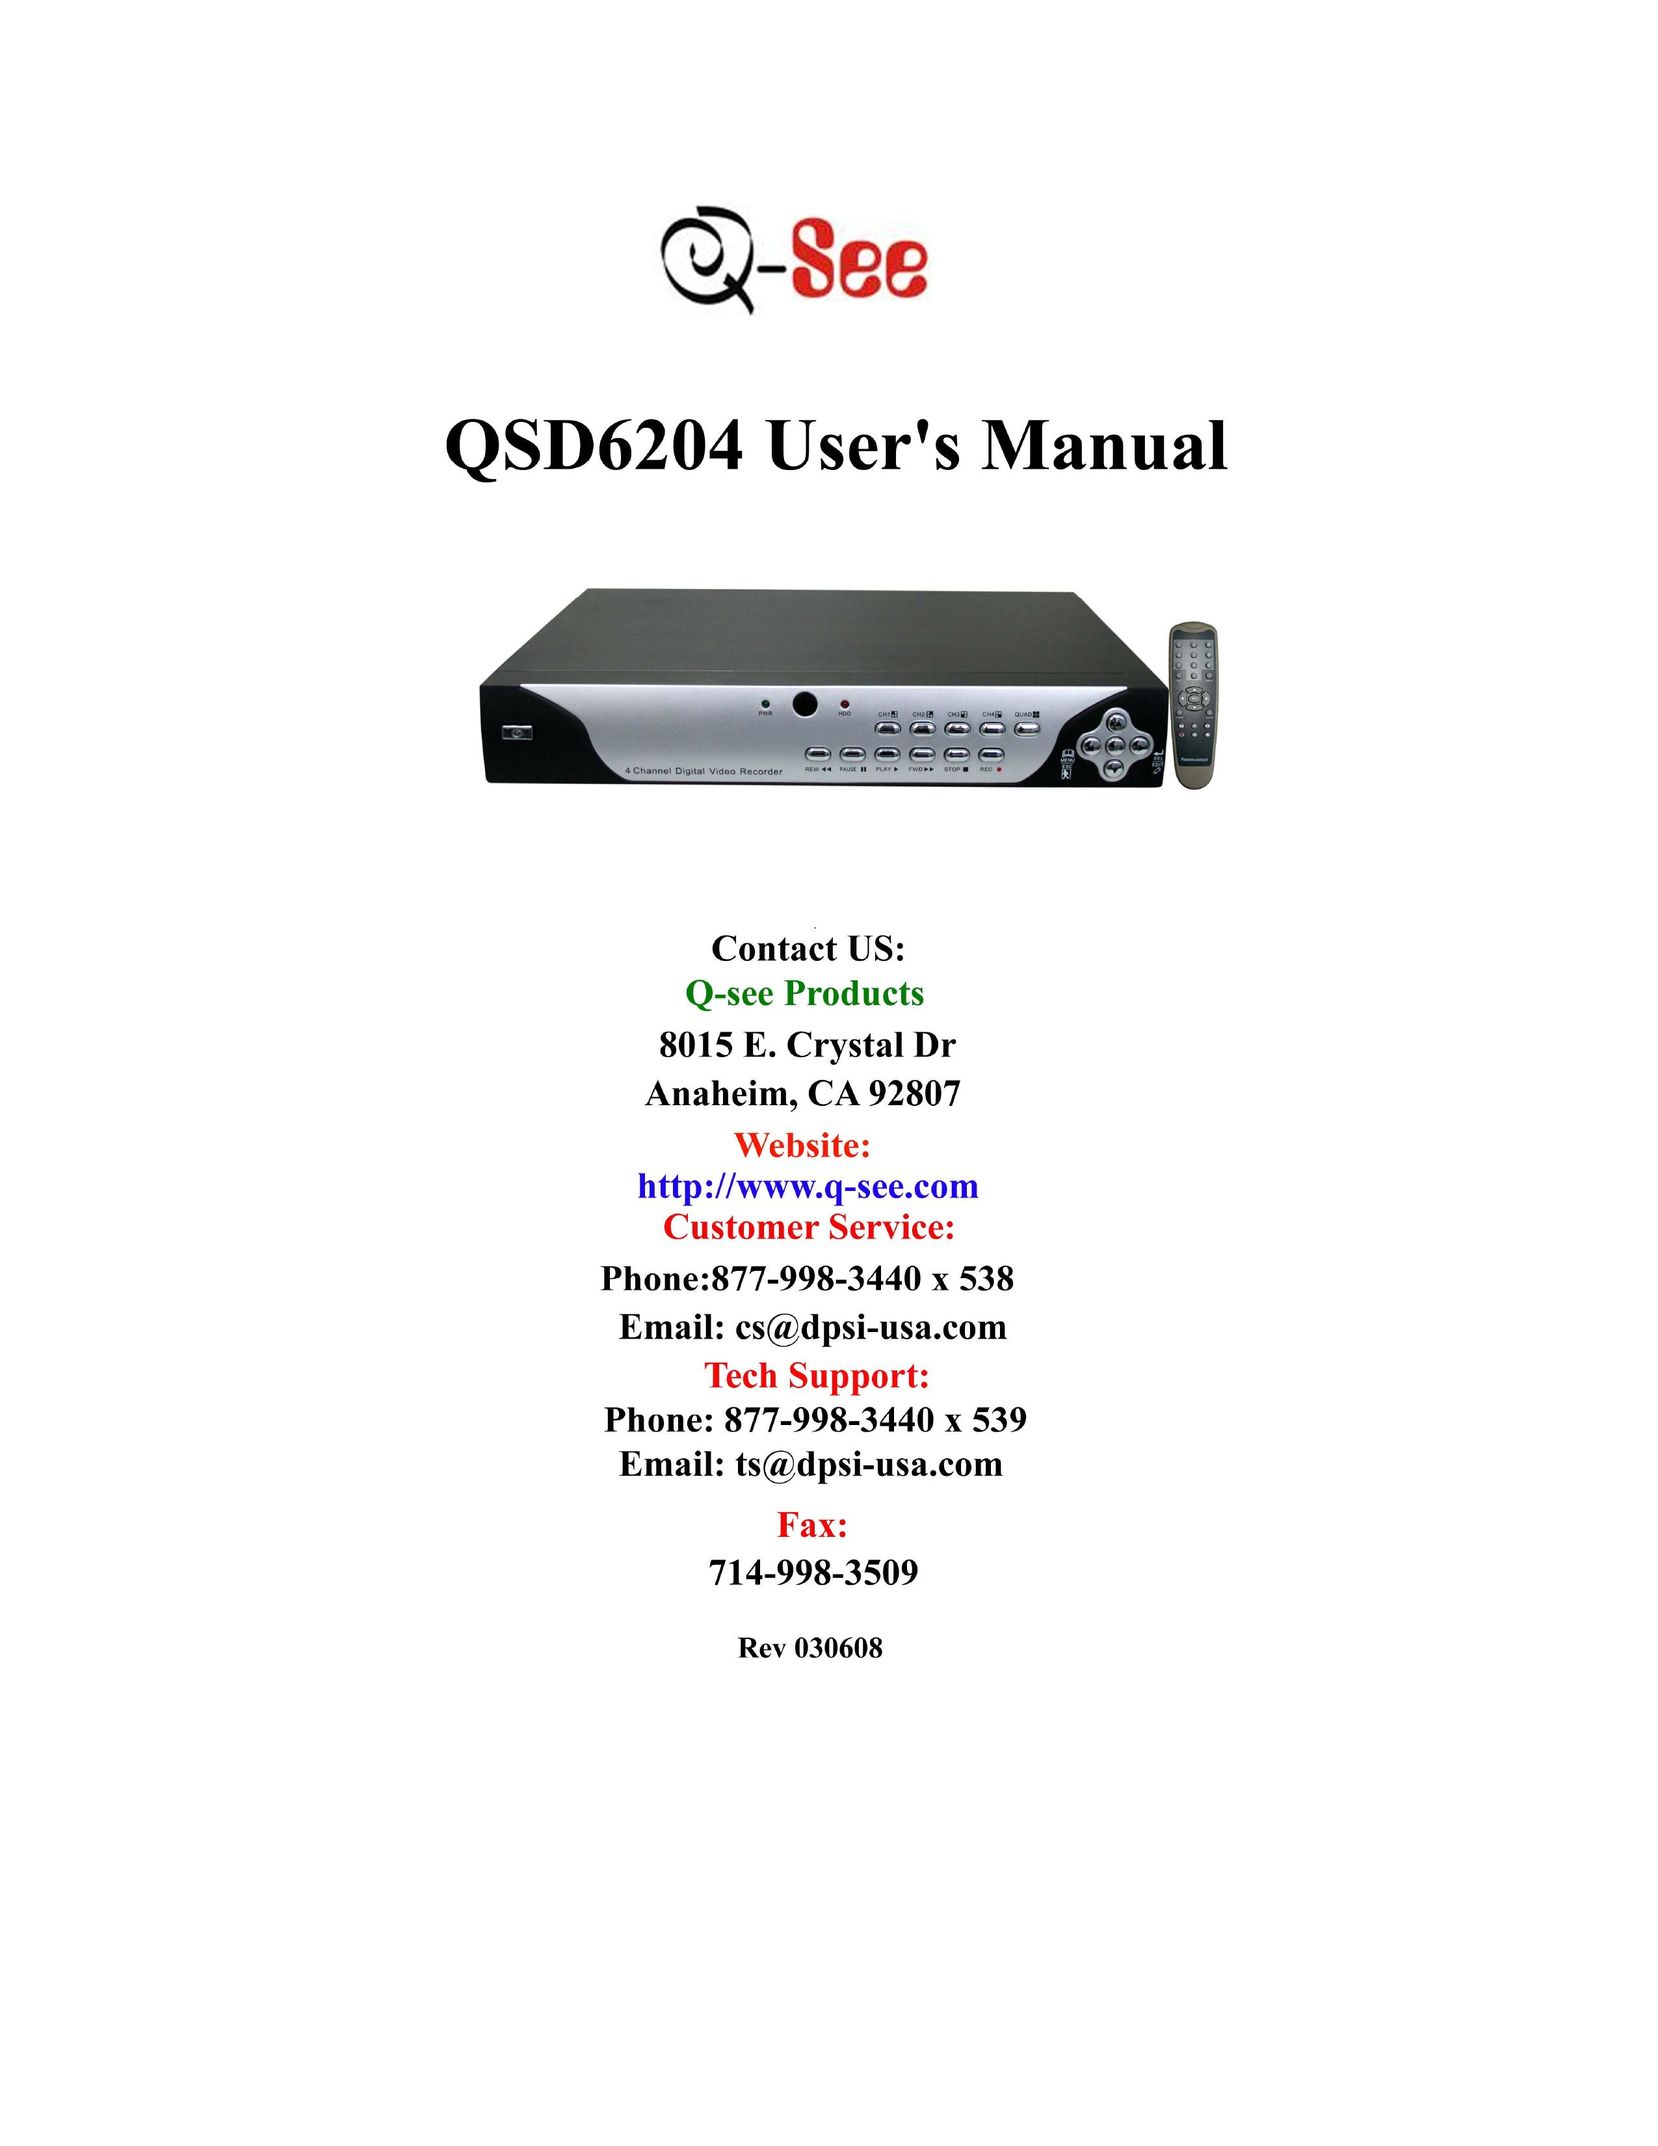 Q-See QSD6204 DVR User Manual